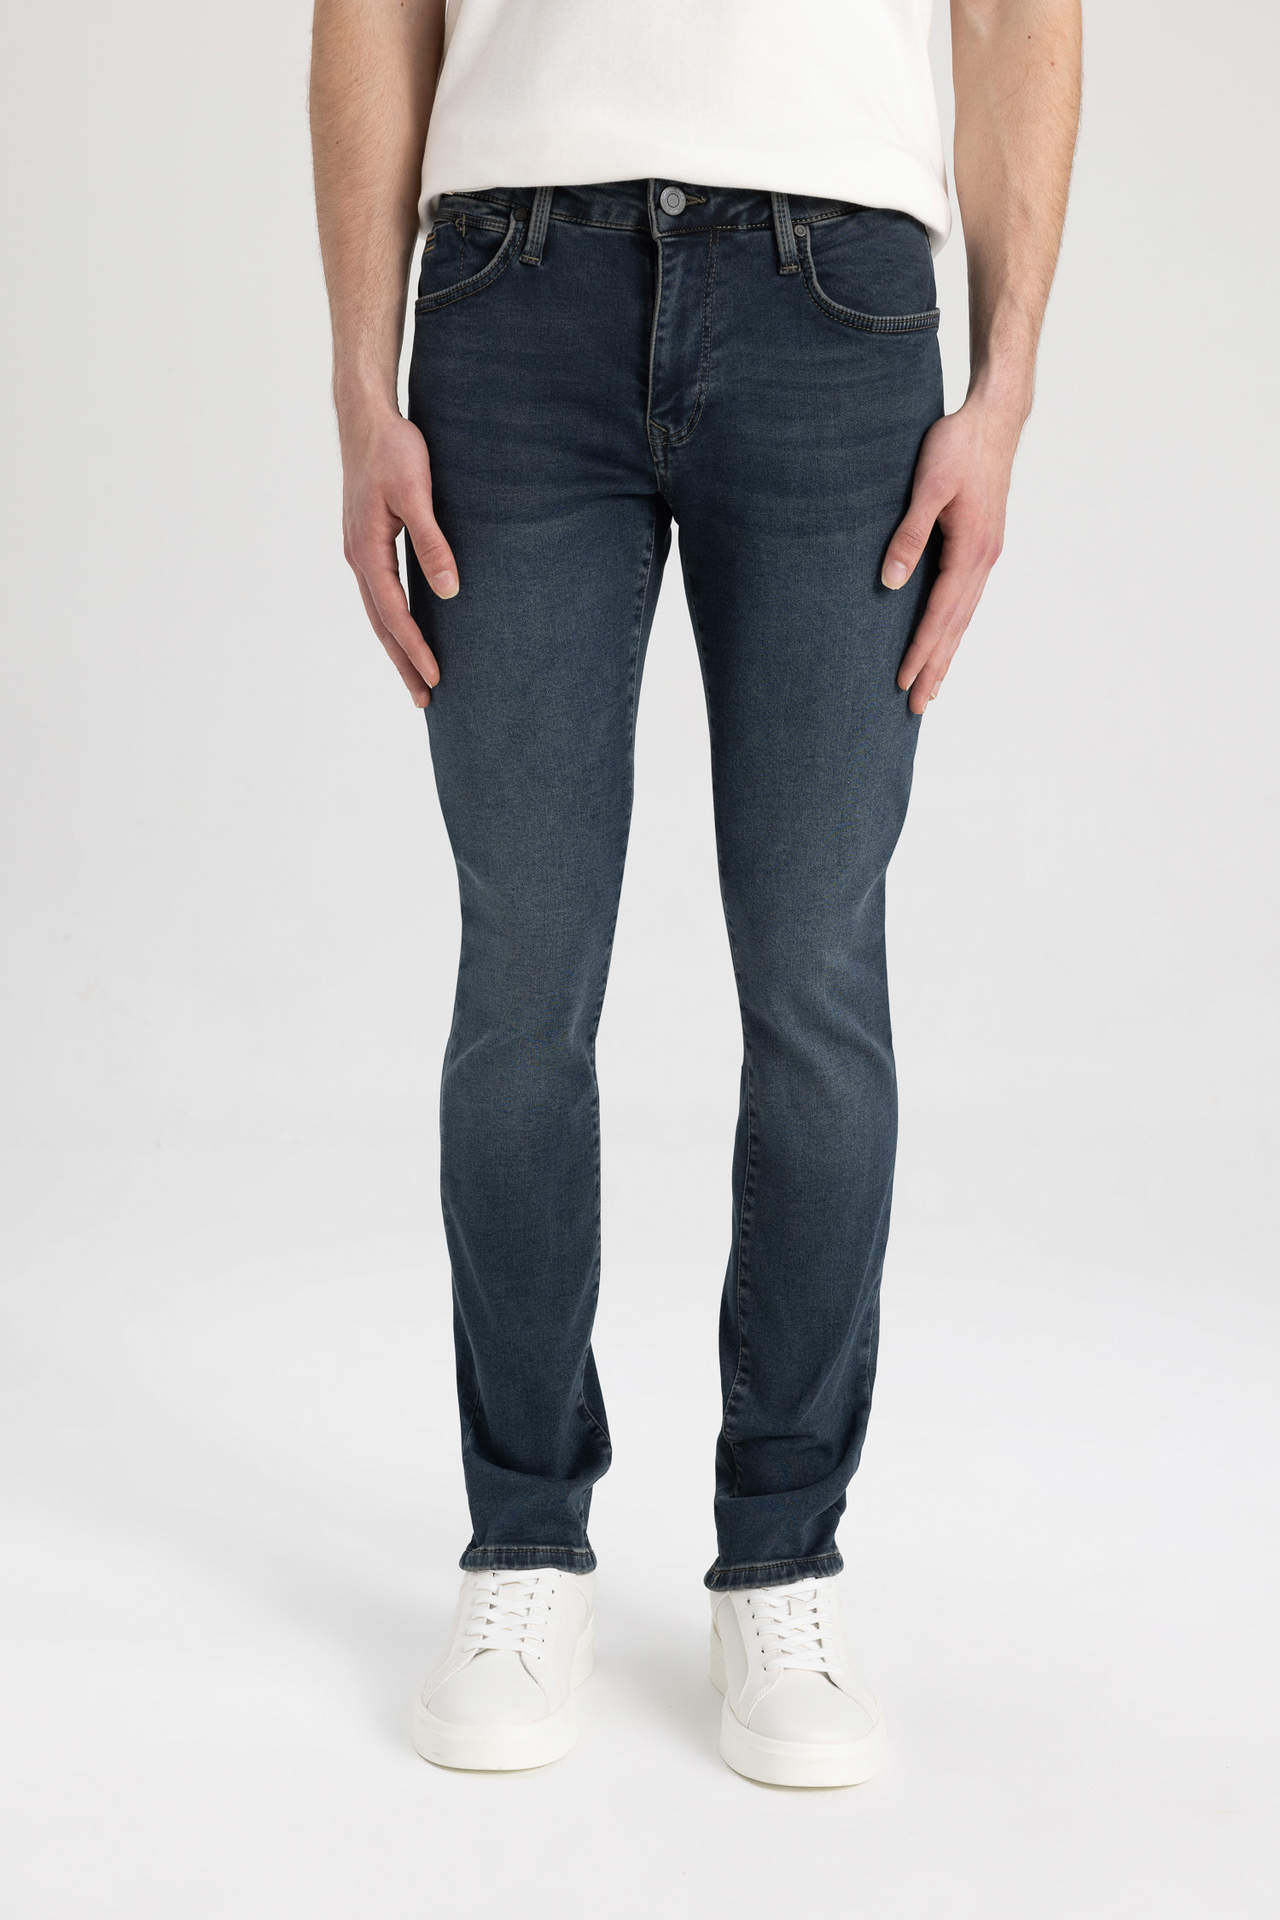 DEFACTO Pedro Slim Fit Normal Waist Jeans